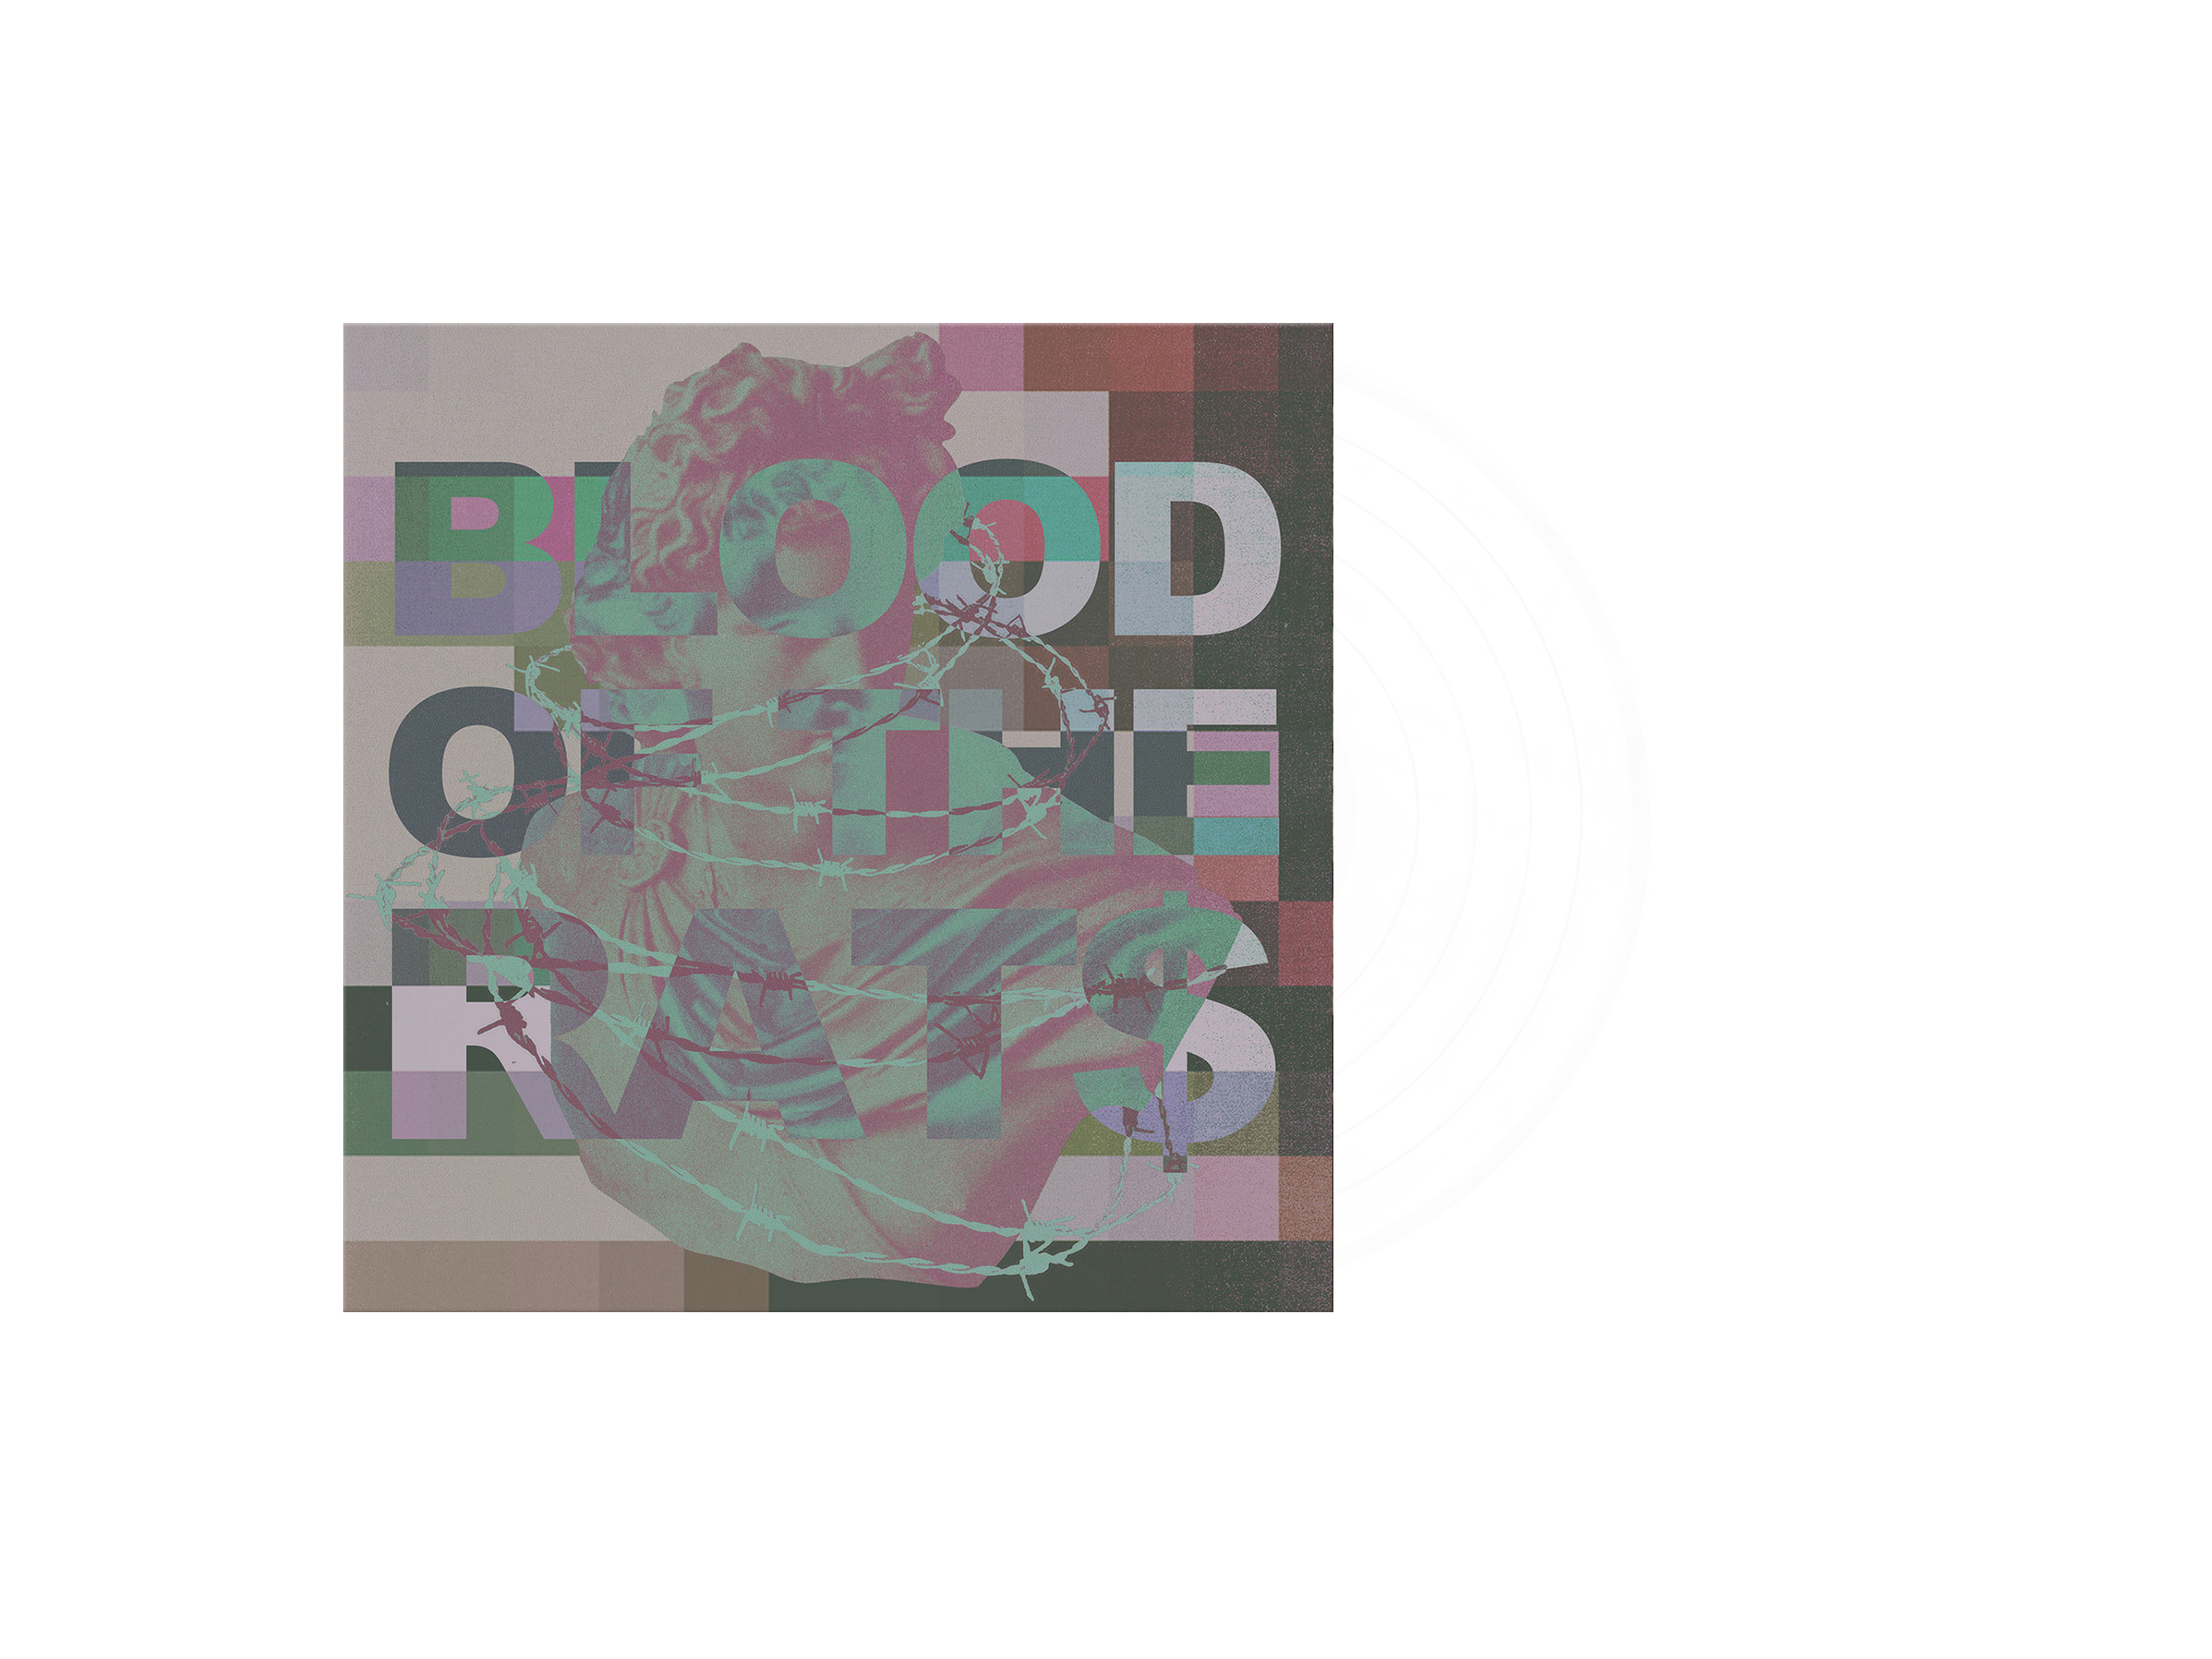 Funeral Fires - Blood of the Rat$ Vinyl (White Belt)